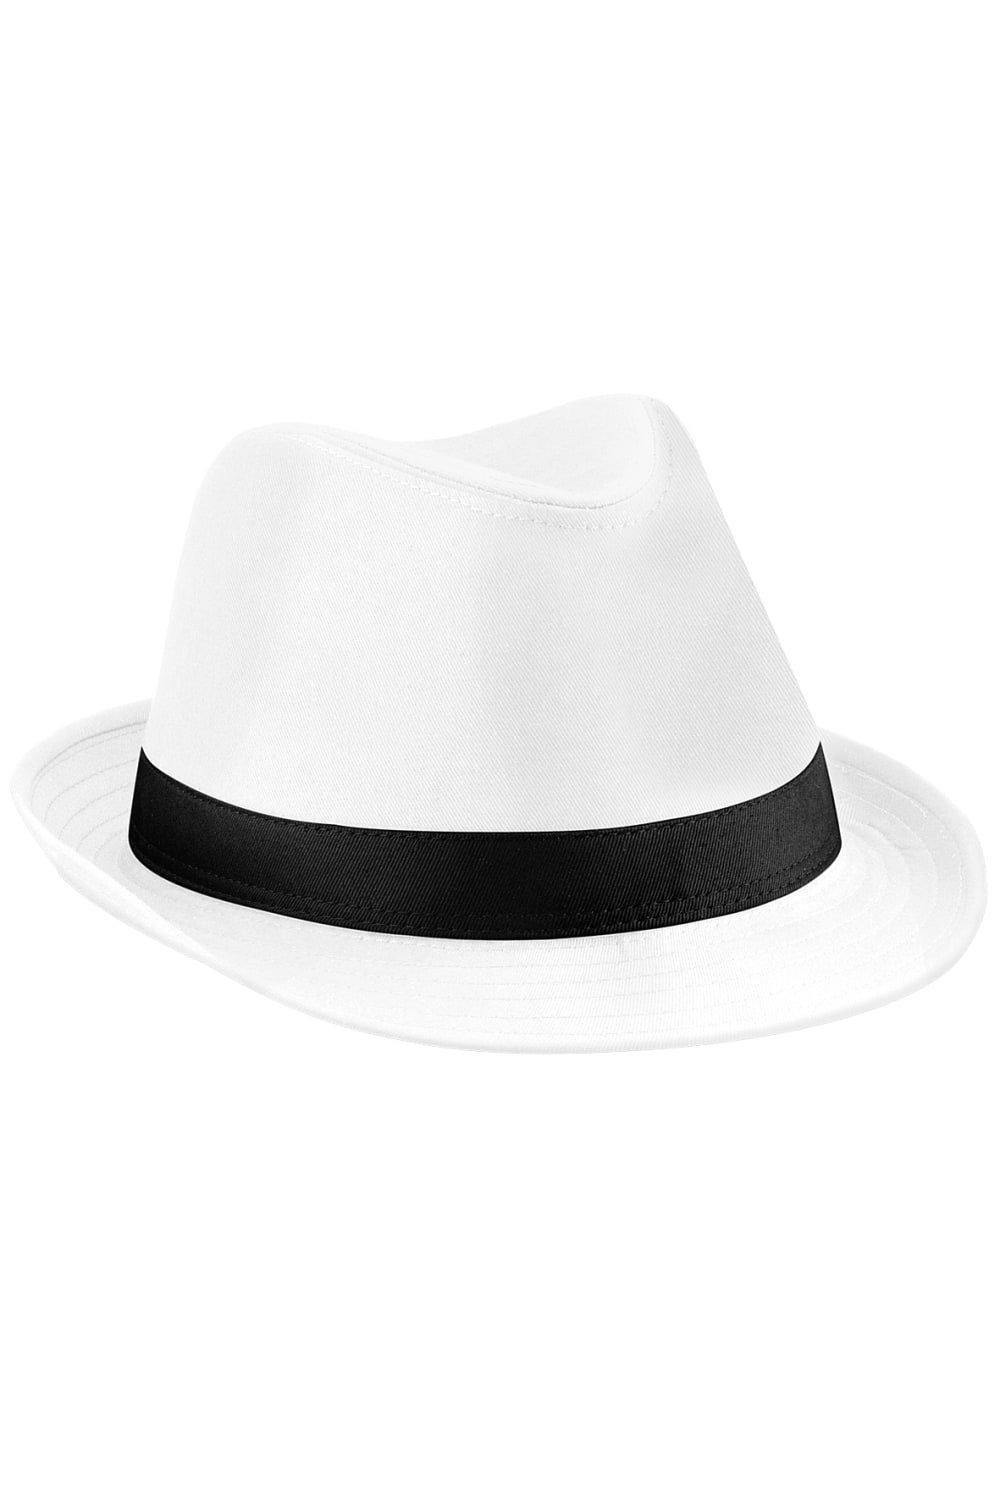 шляпа Федора Beechfield, белый мешки для пылесосов bork v704 тип v7d3 ozone microne m 57 арт m 57